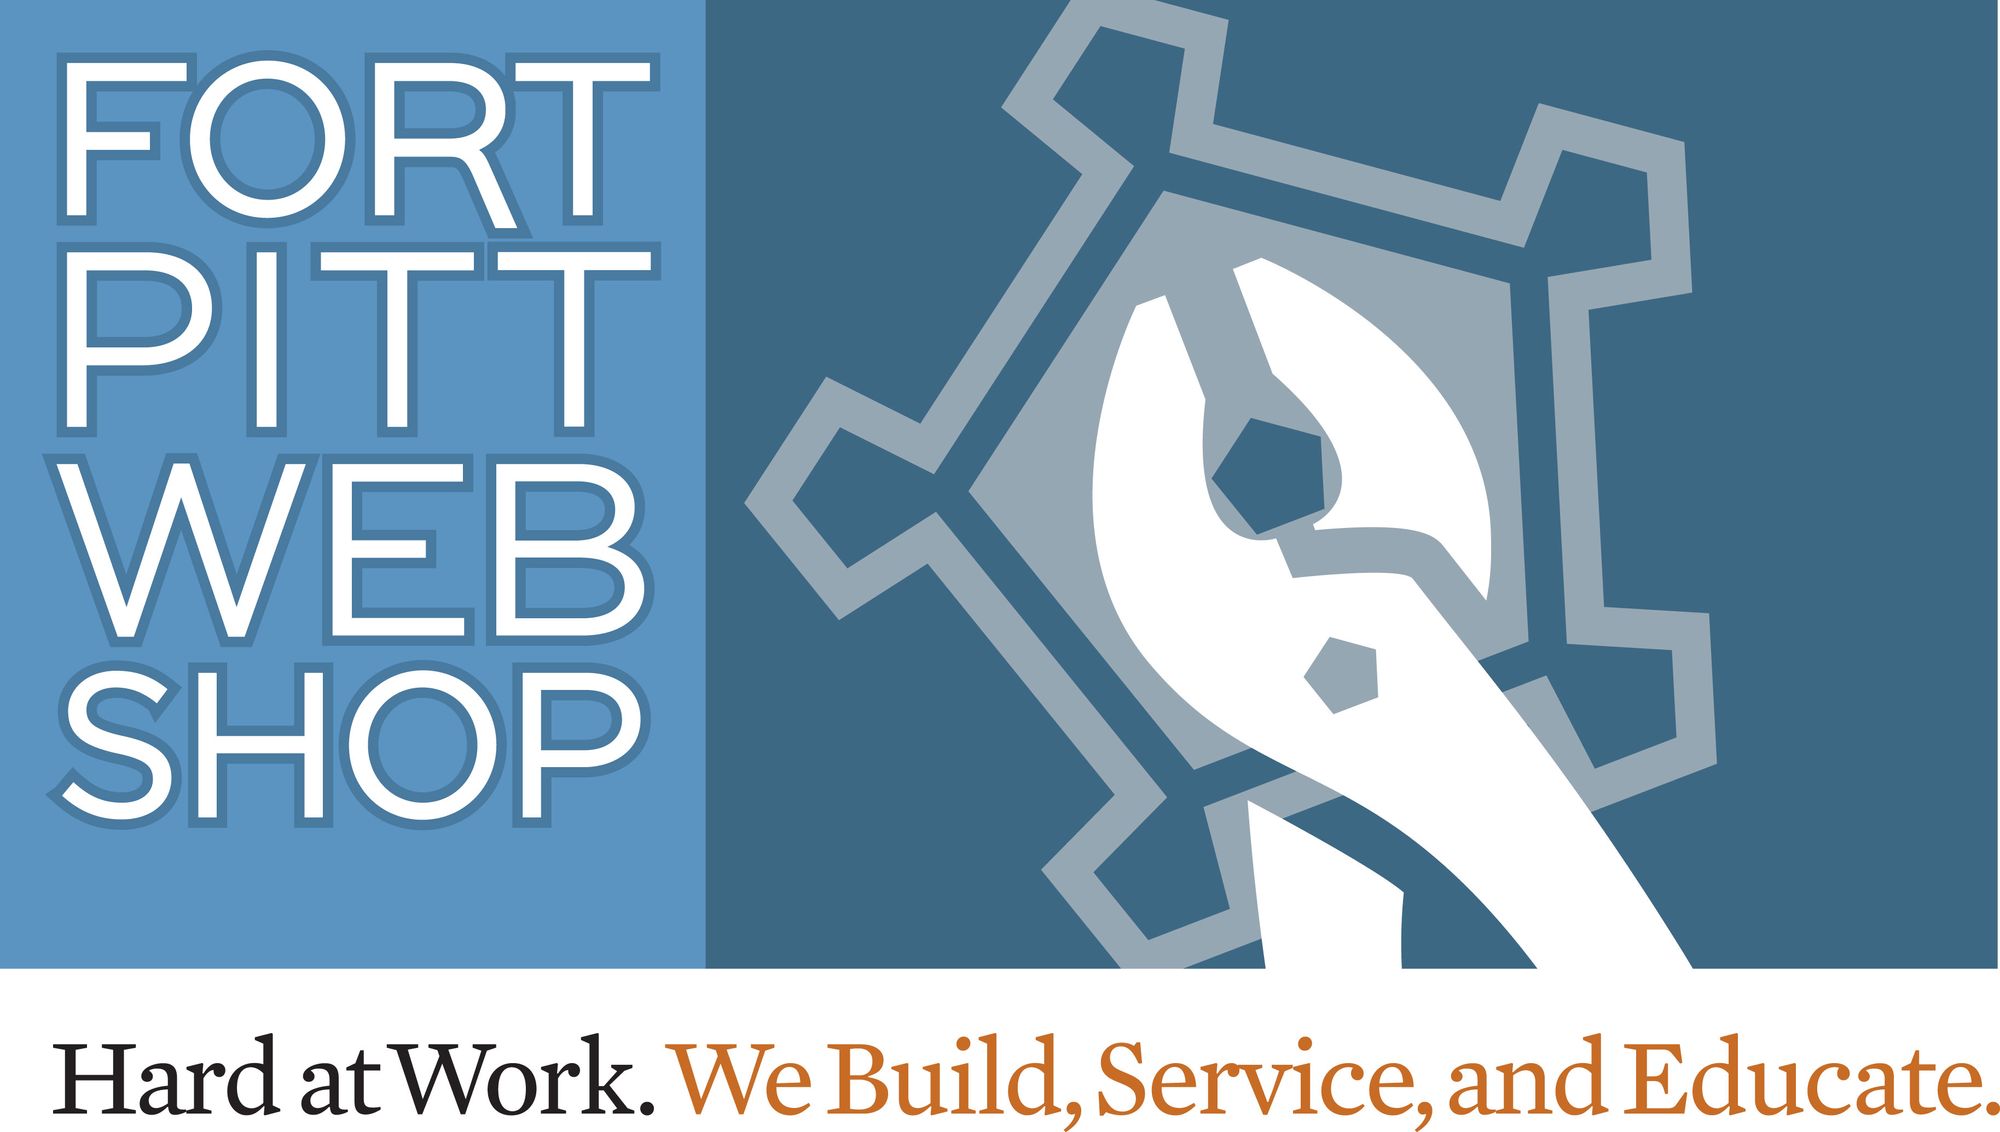 Launching the Fort Pitt Web Shop